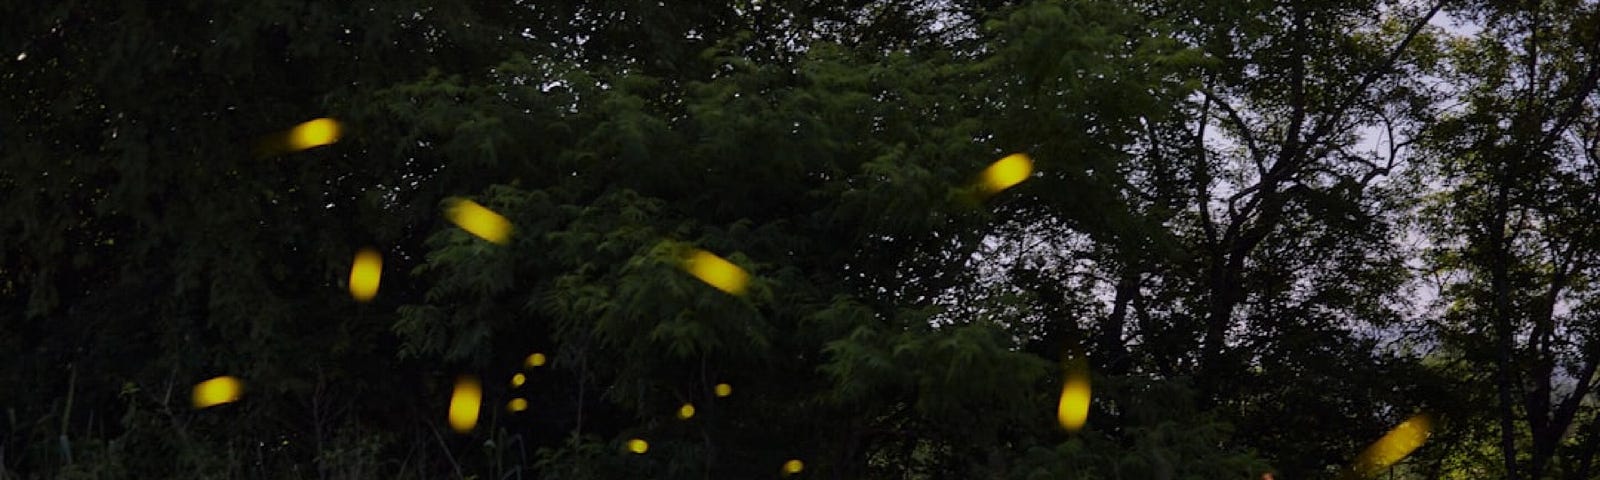 Golden fireflies swarming over green grass against dark trees at dusk.